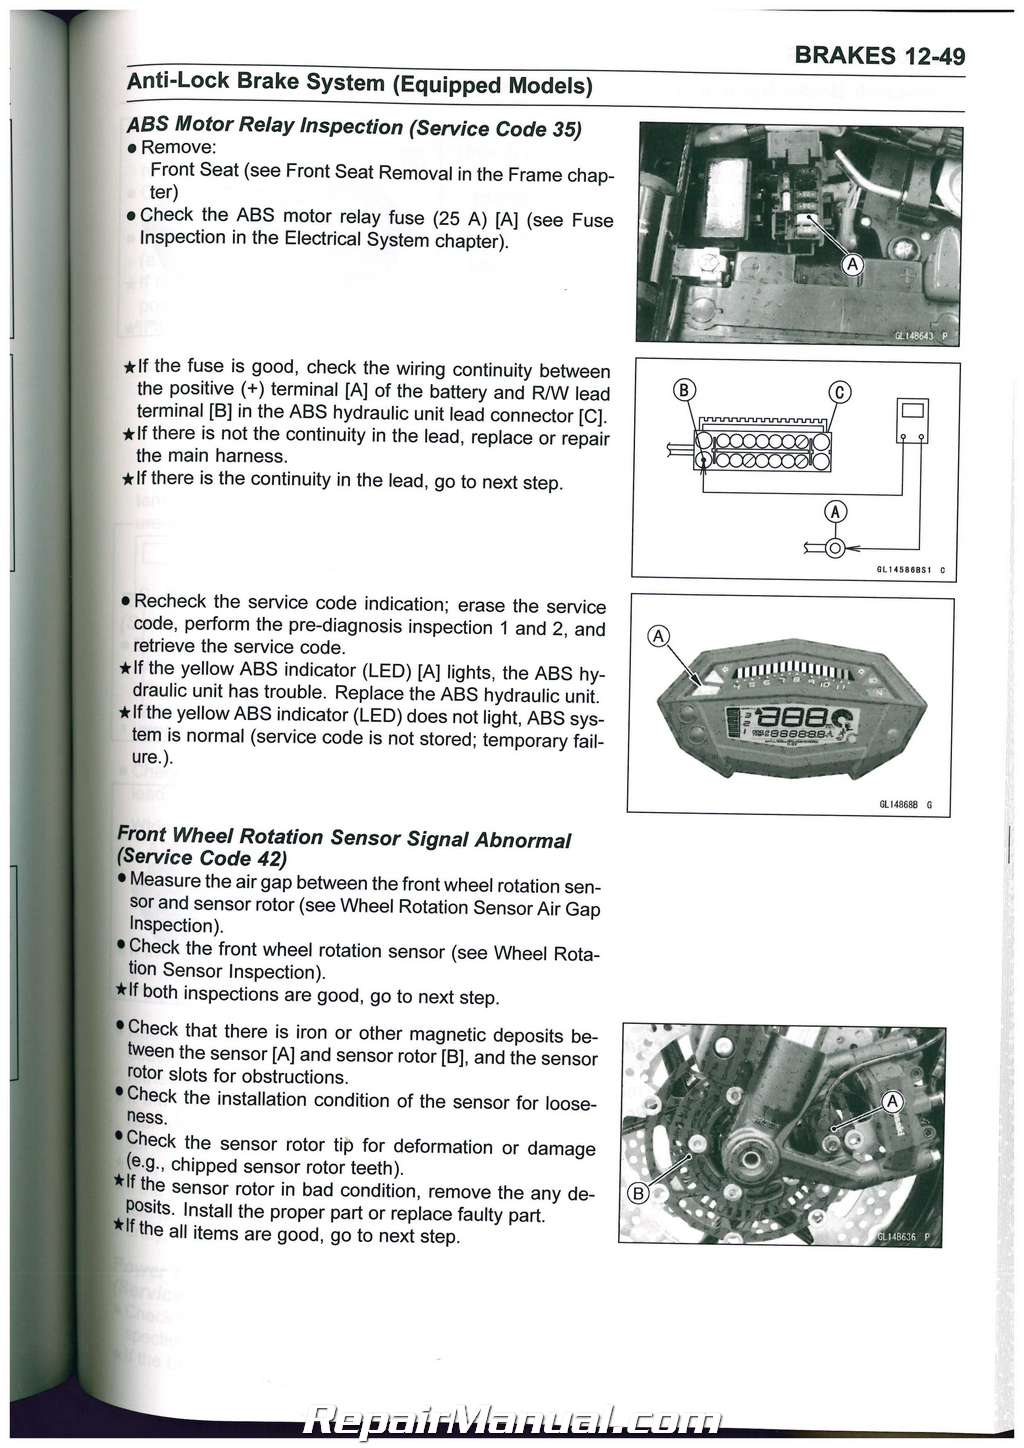 2016 Kawasaki Z1000 Service Manual - linuxentrancement